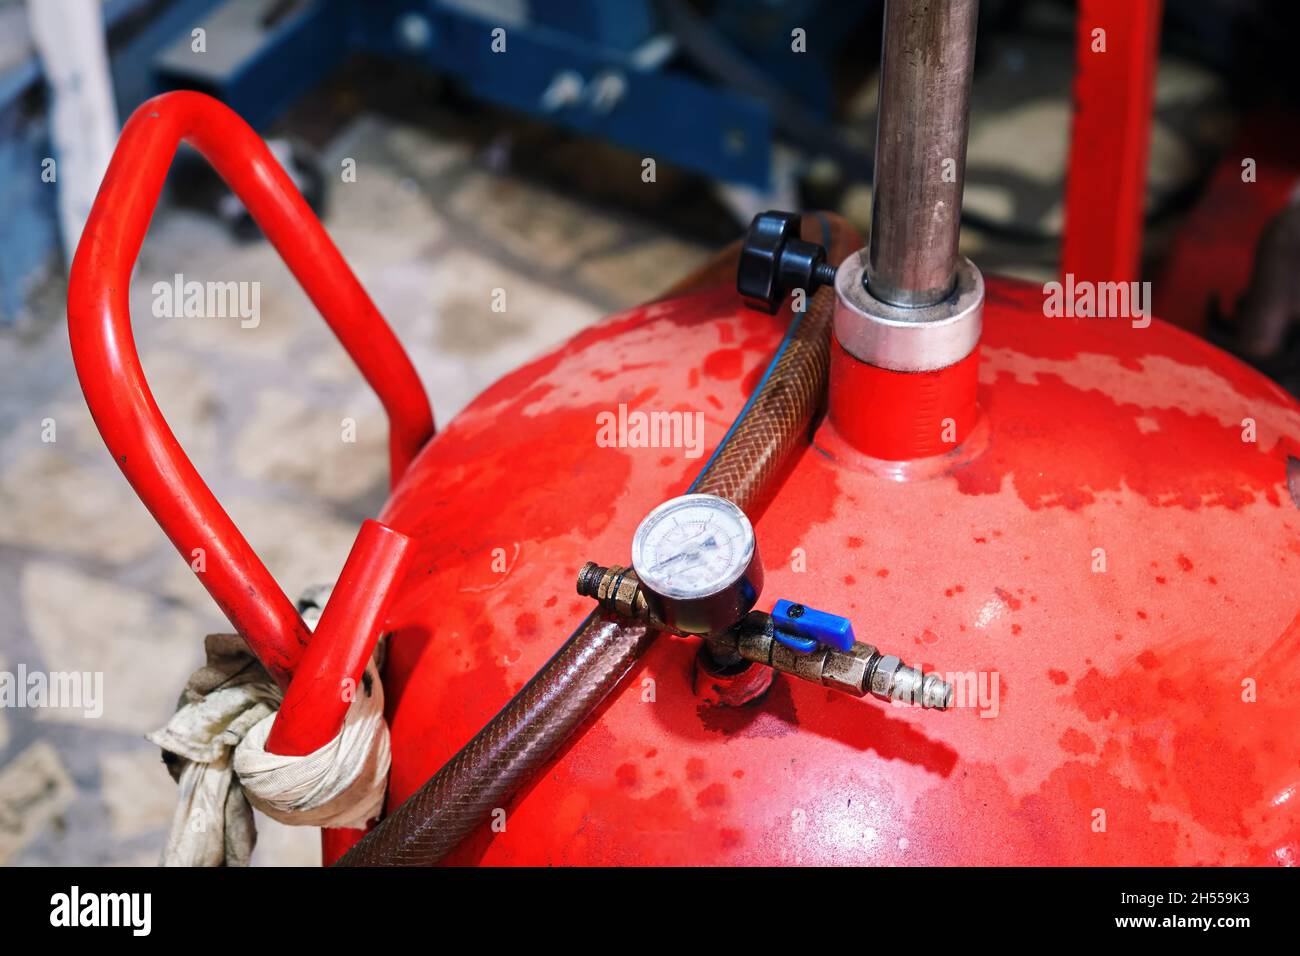 Extractor de aceite neumatico fotografías e imágenes de alta resolución -  Alamy